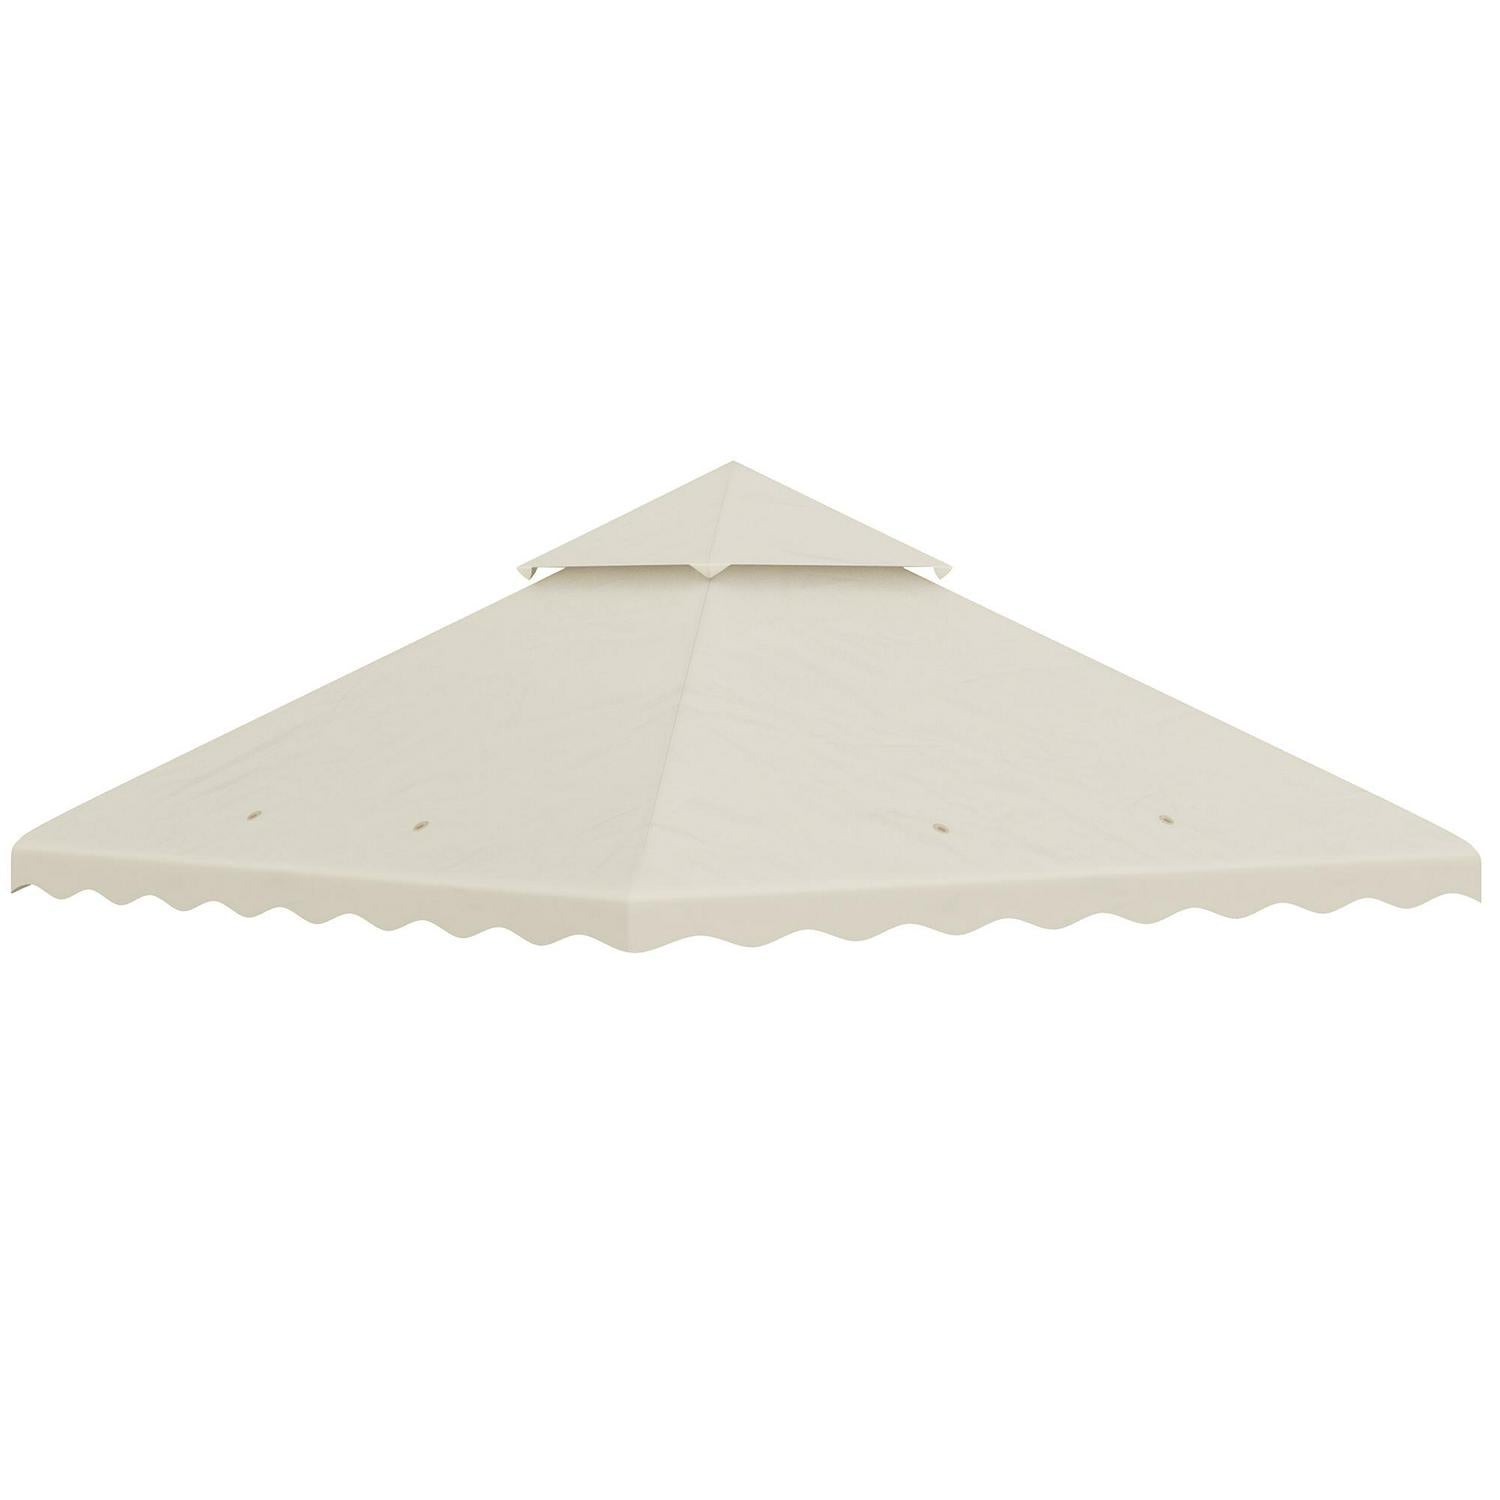 Gazebo Canopy Replacement Covers- Cream White